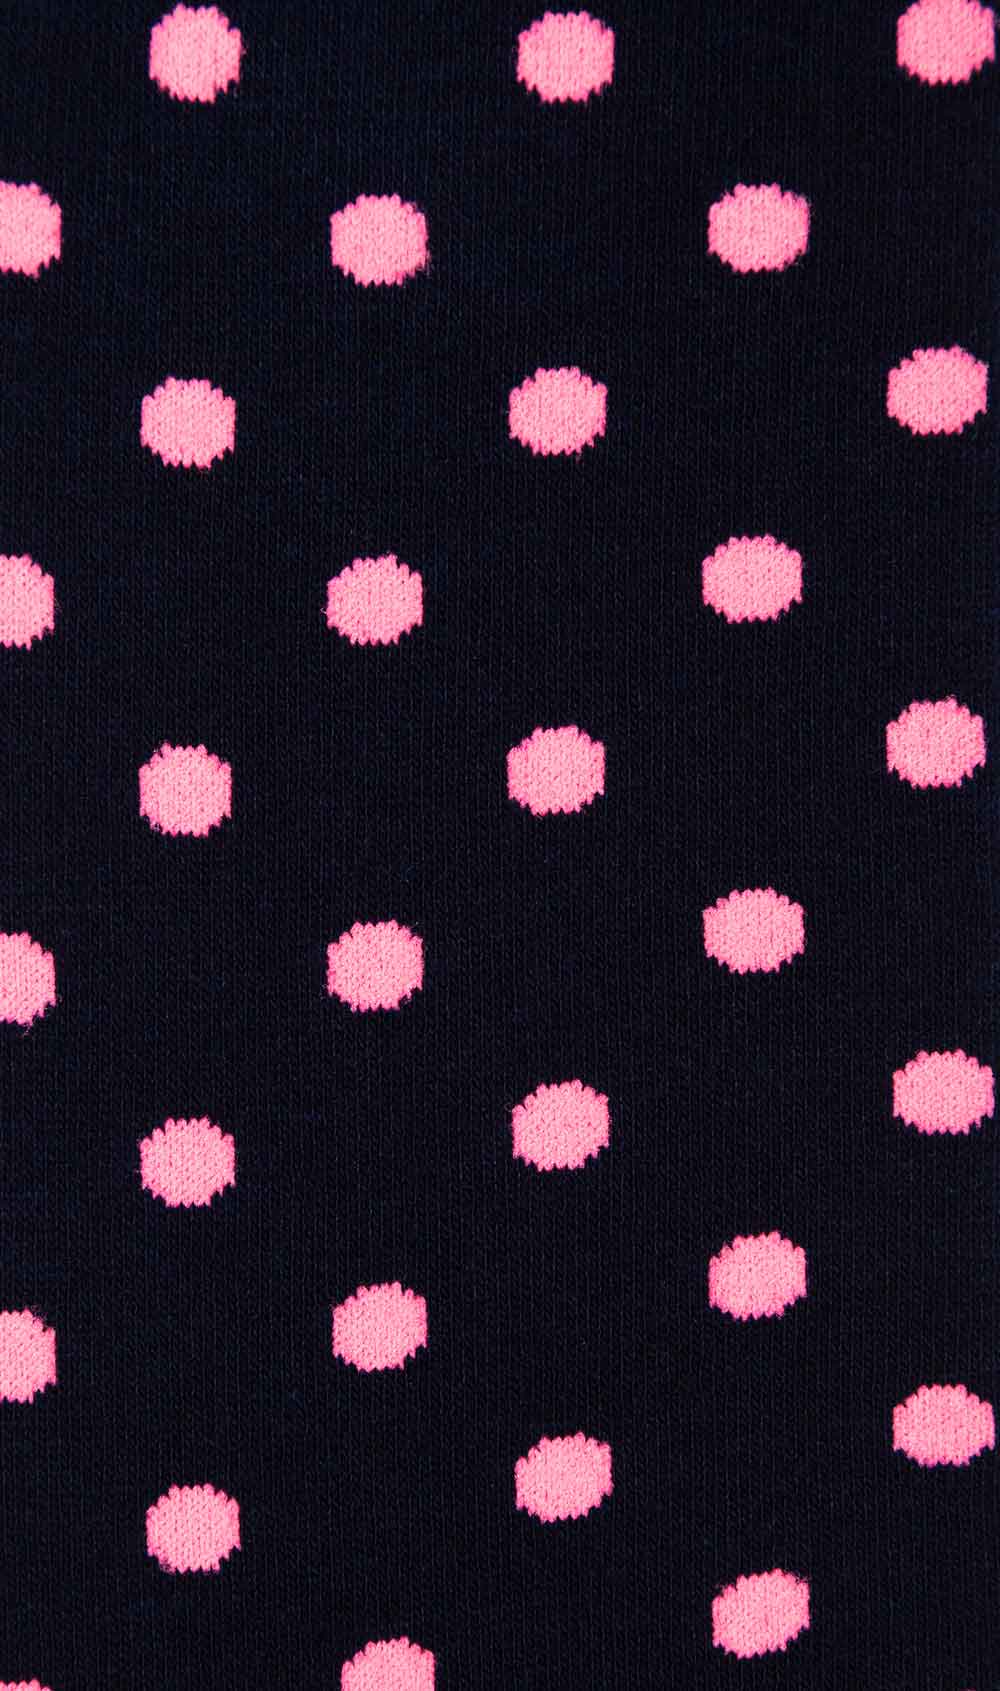 Midnight Blue on Pink Dot Socks Fabric